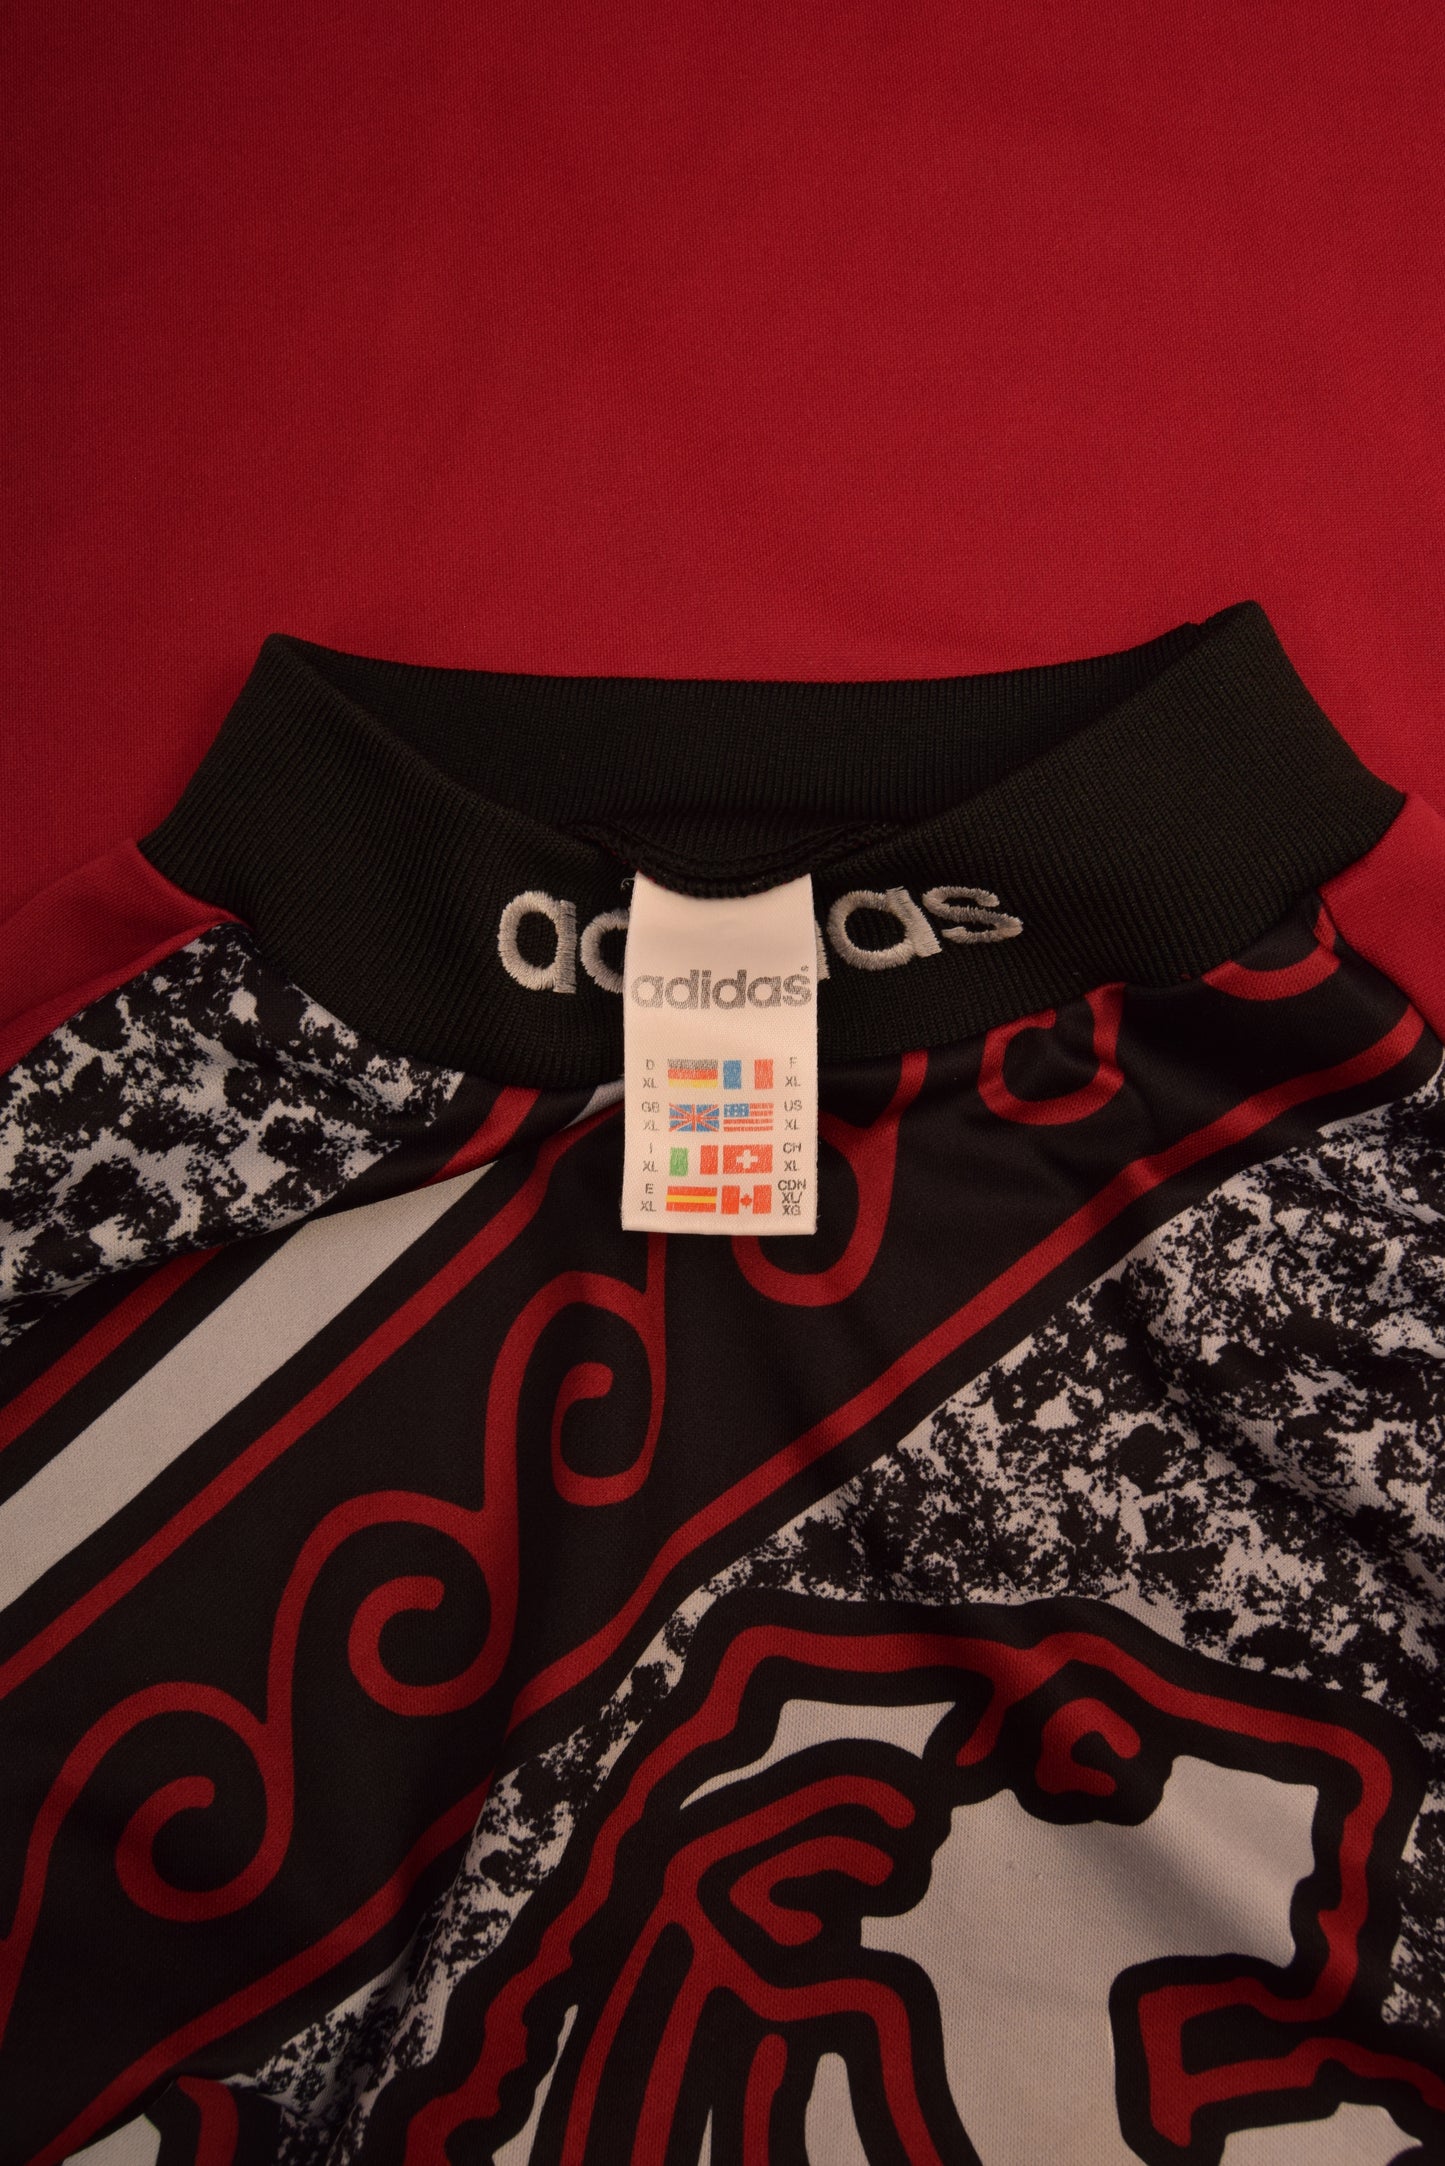 90's Adidas Etrusco Goalkeeper Football Shirt Template 1990 - 2000 Made in England Size XL Burgundy Black Grey Long Sleeve